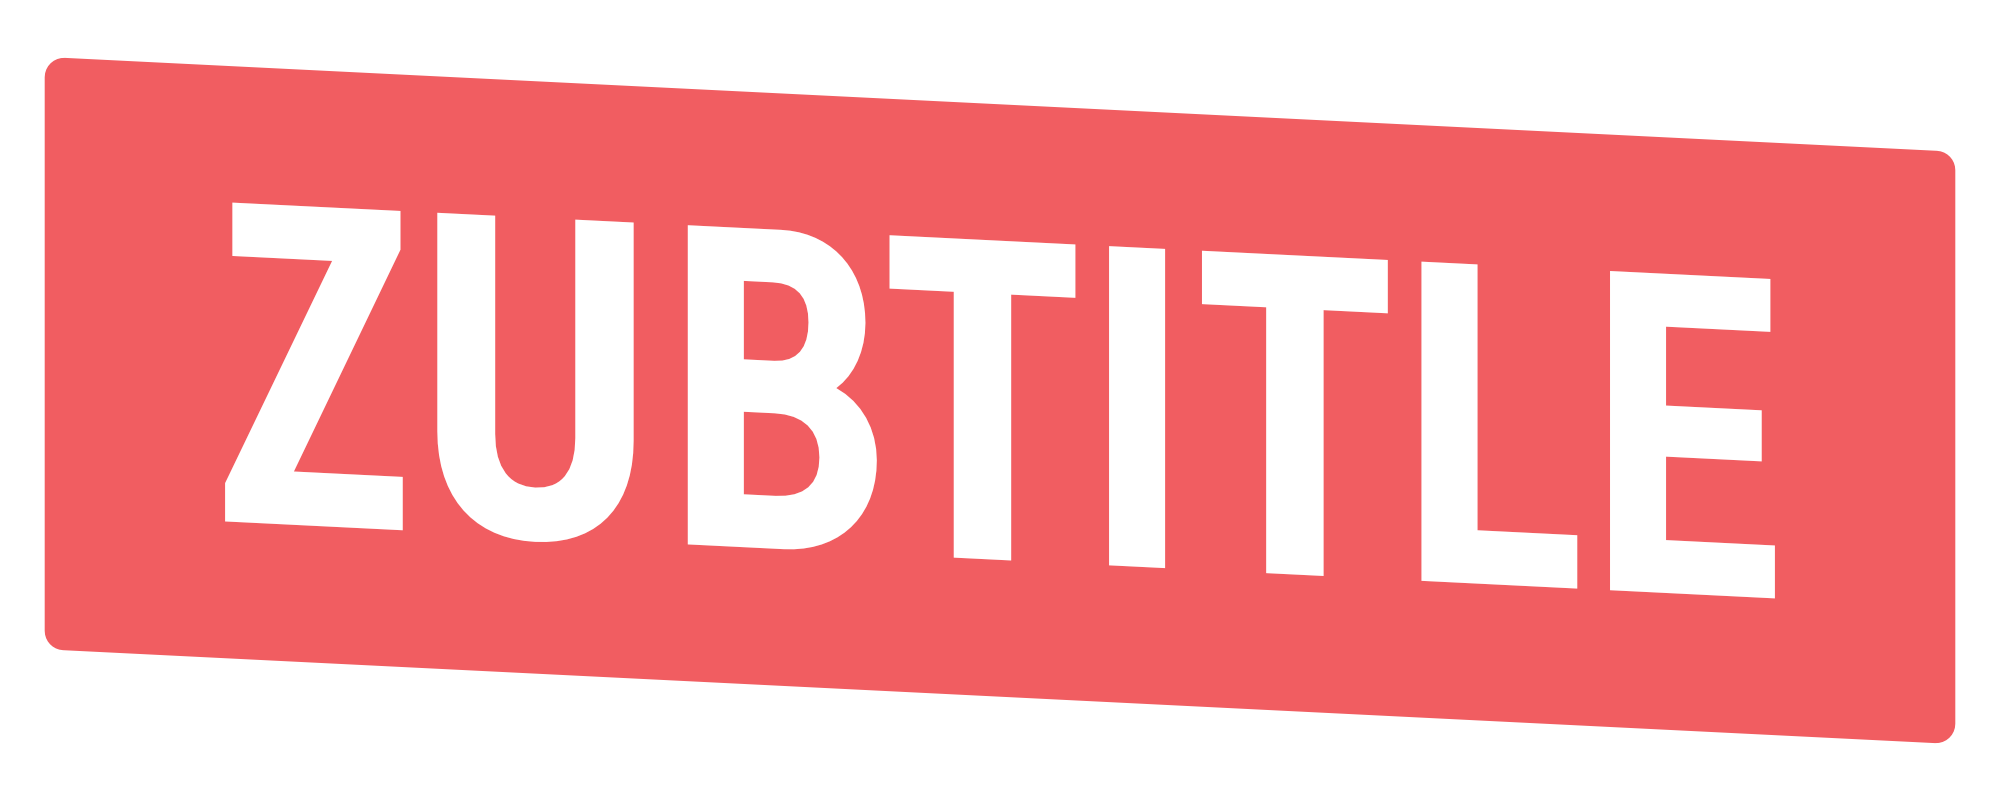 Zubtitle-long-logo